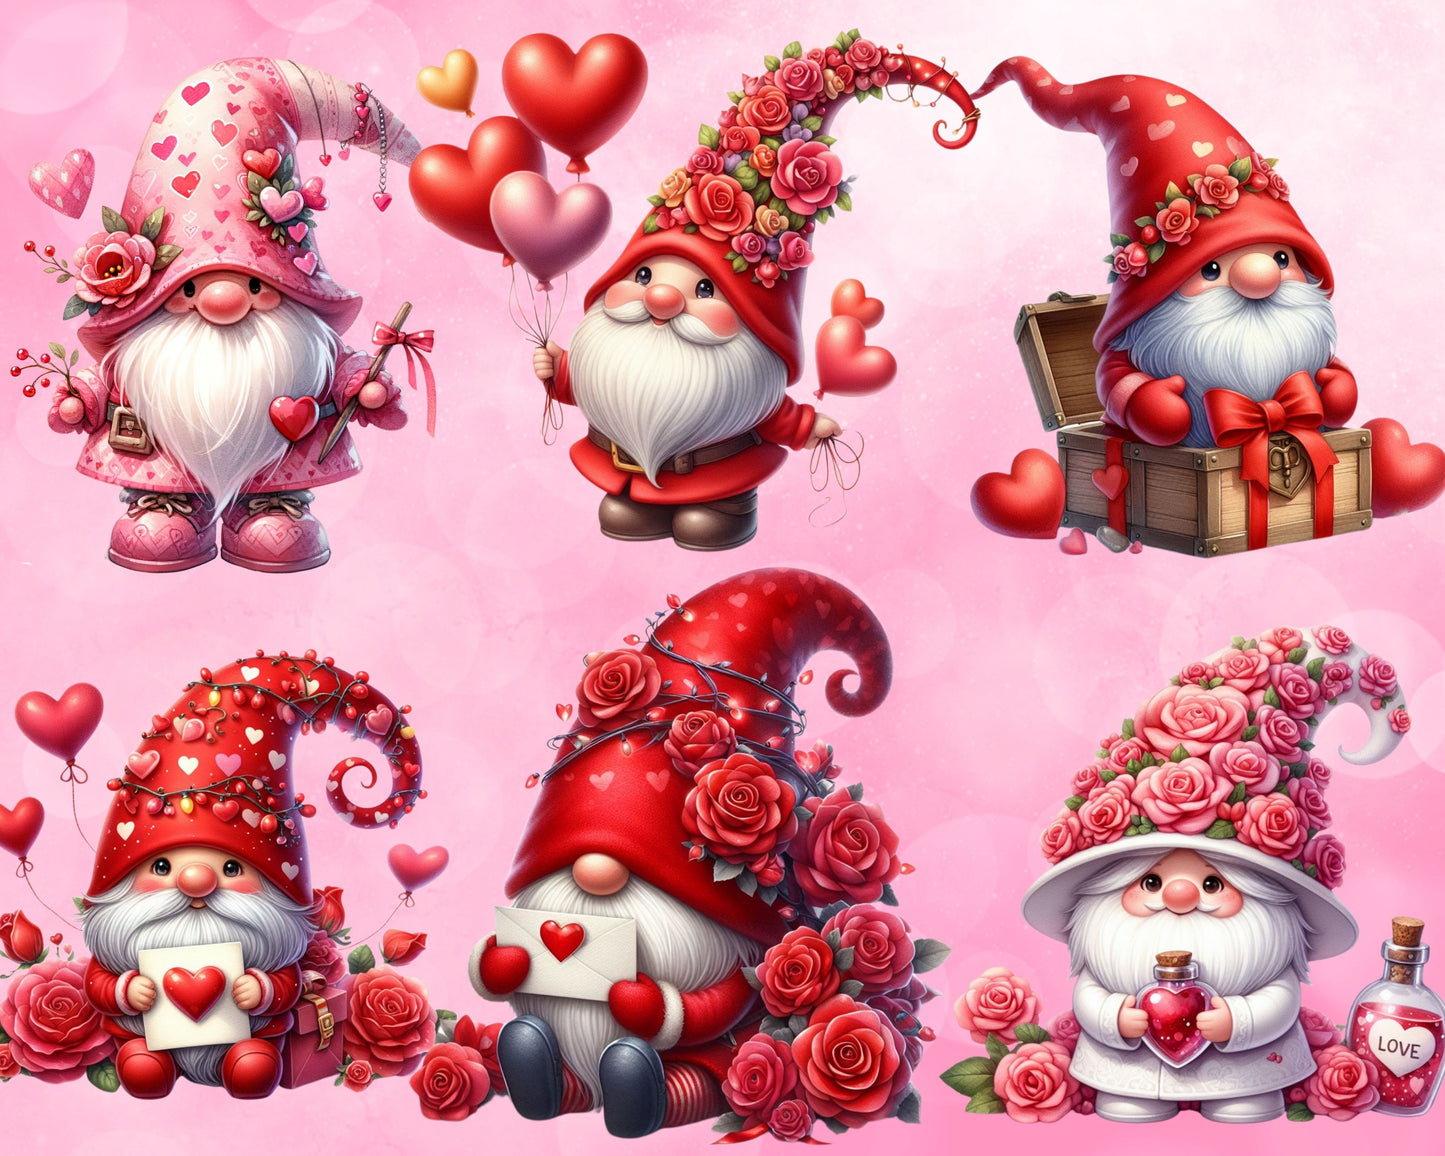 Valentine Gnomes Clip Art Bundle